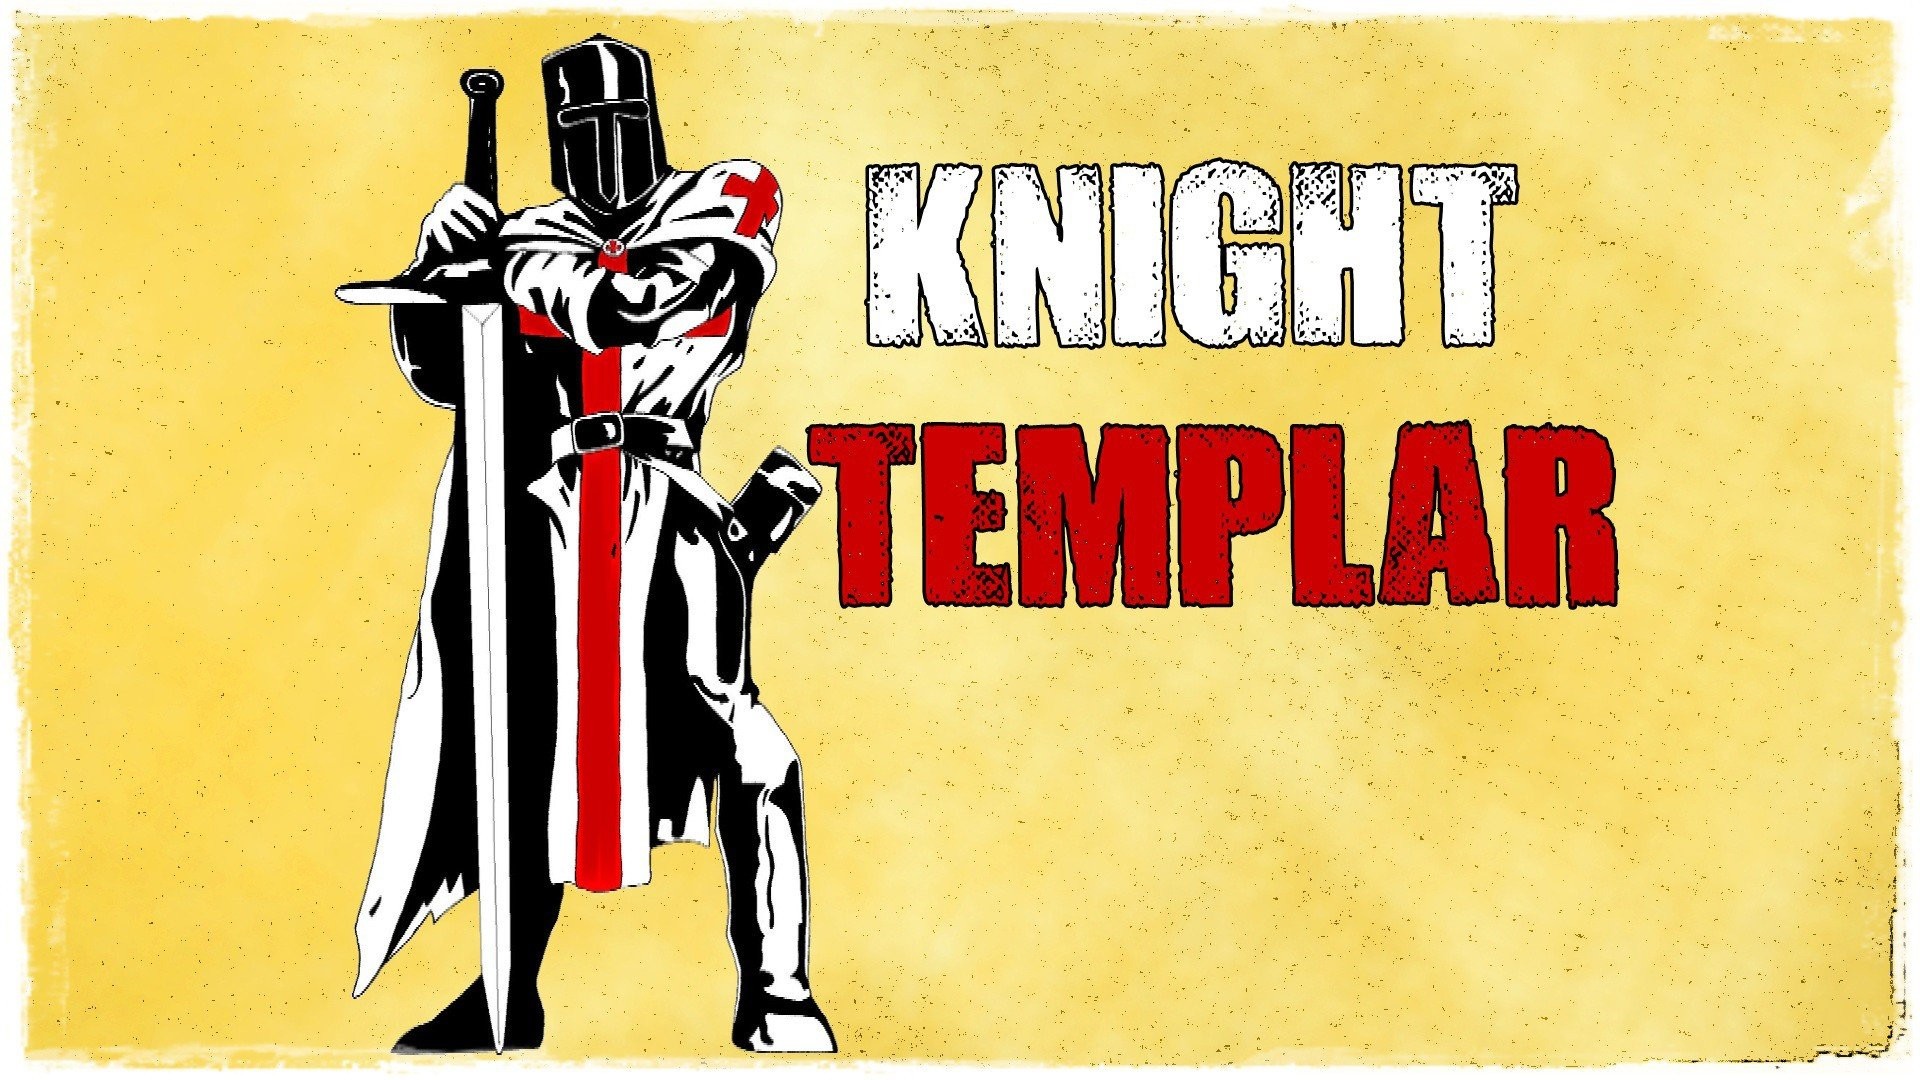 1920x1080 Knight templar wallpapers wallpaper wallpapers pinterest jpg  Templar  knight wallpaper hd